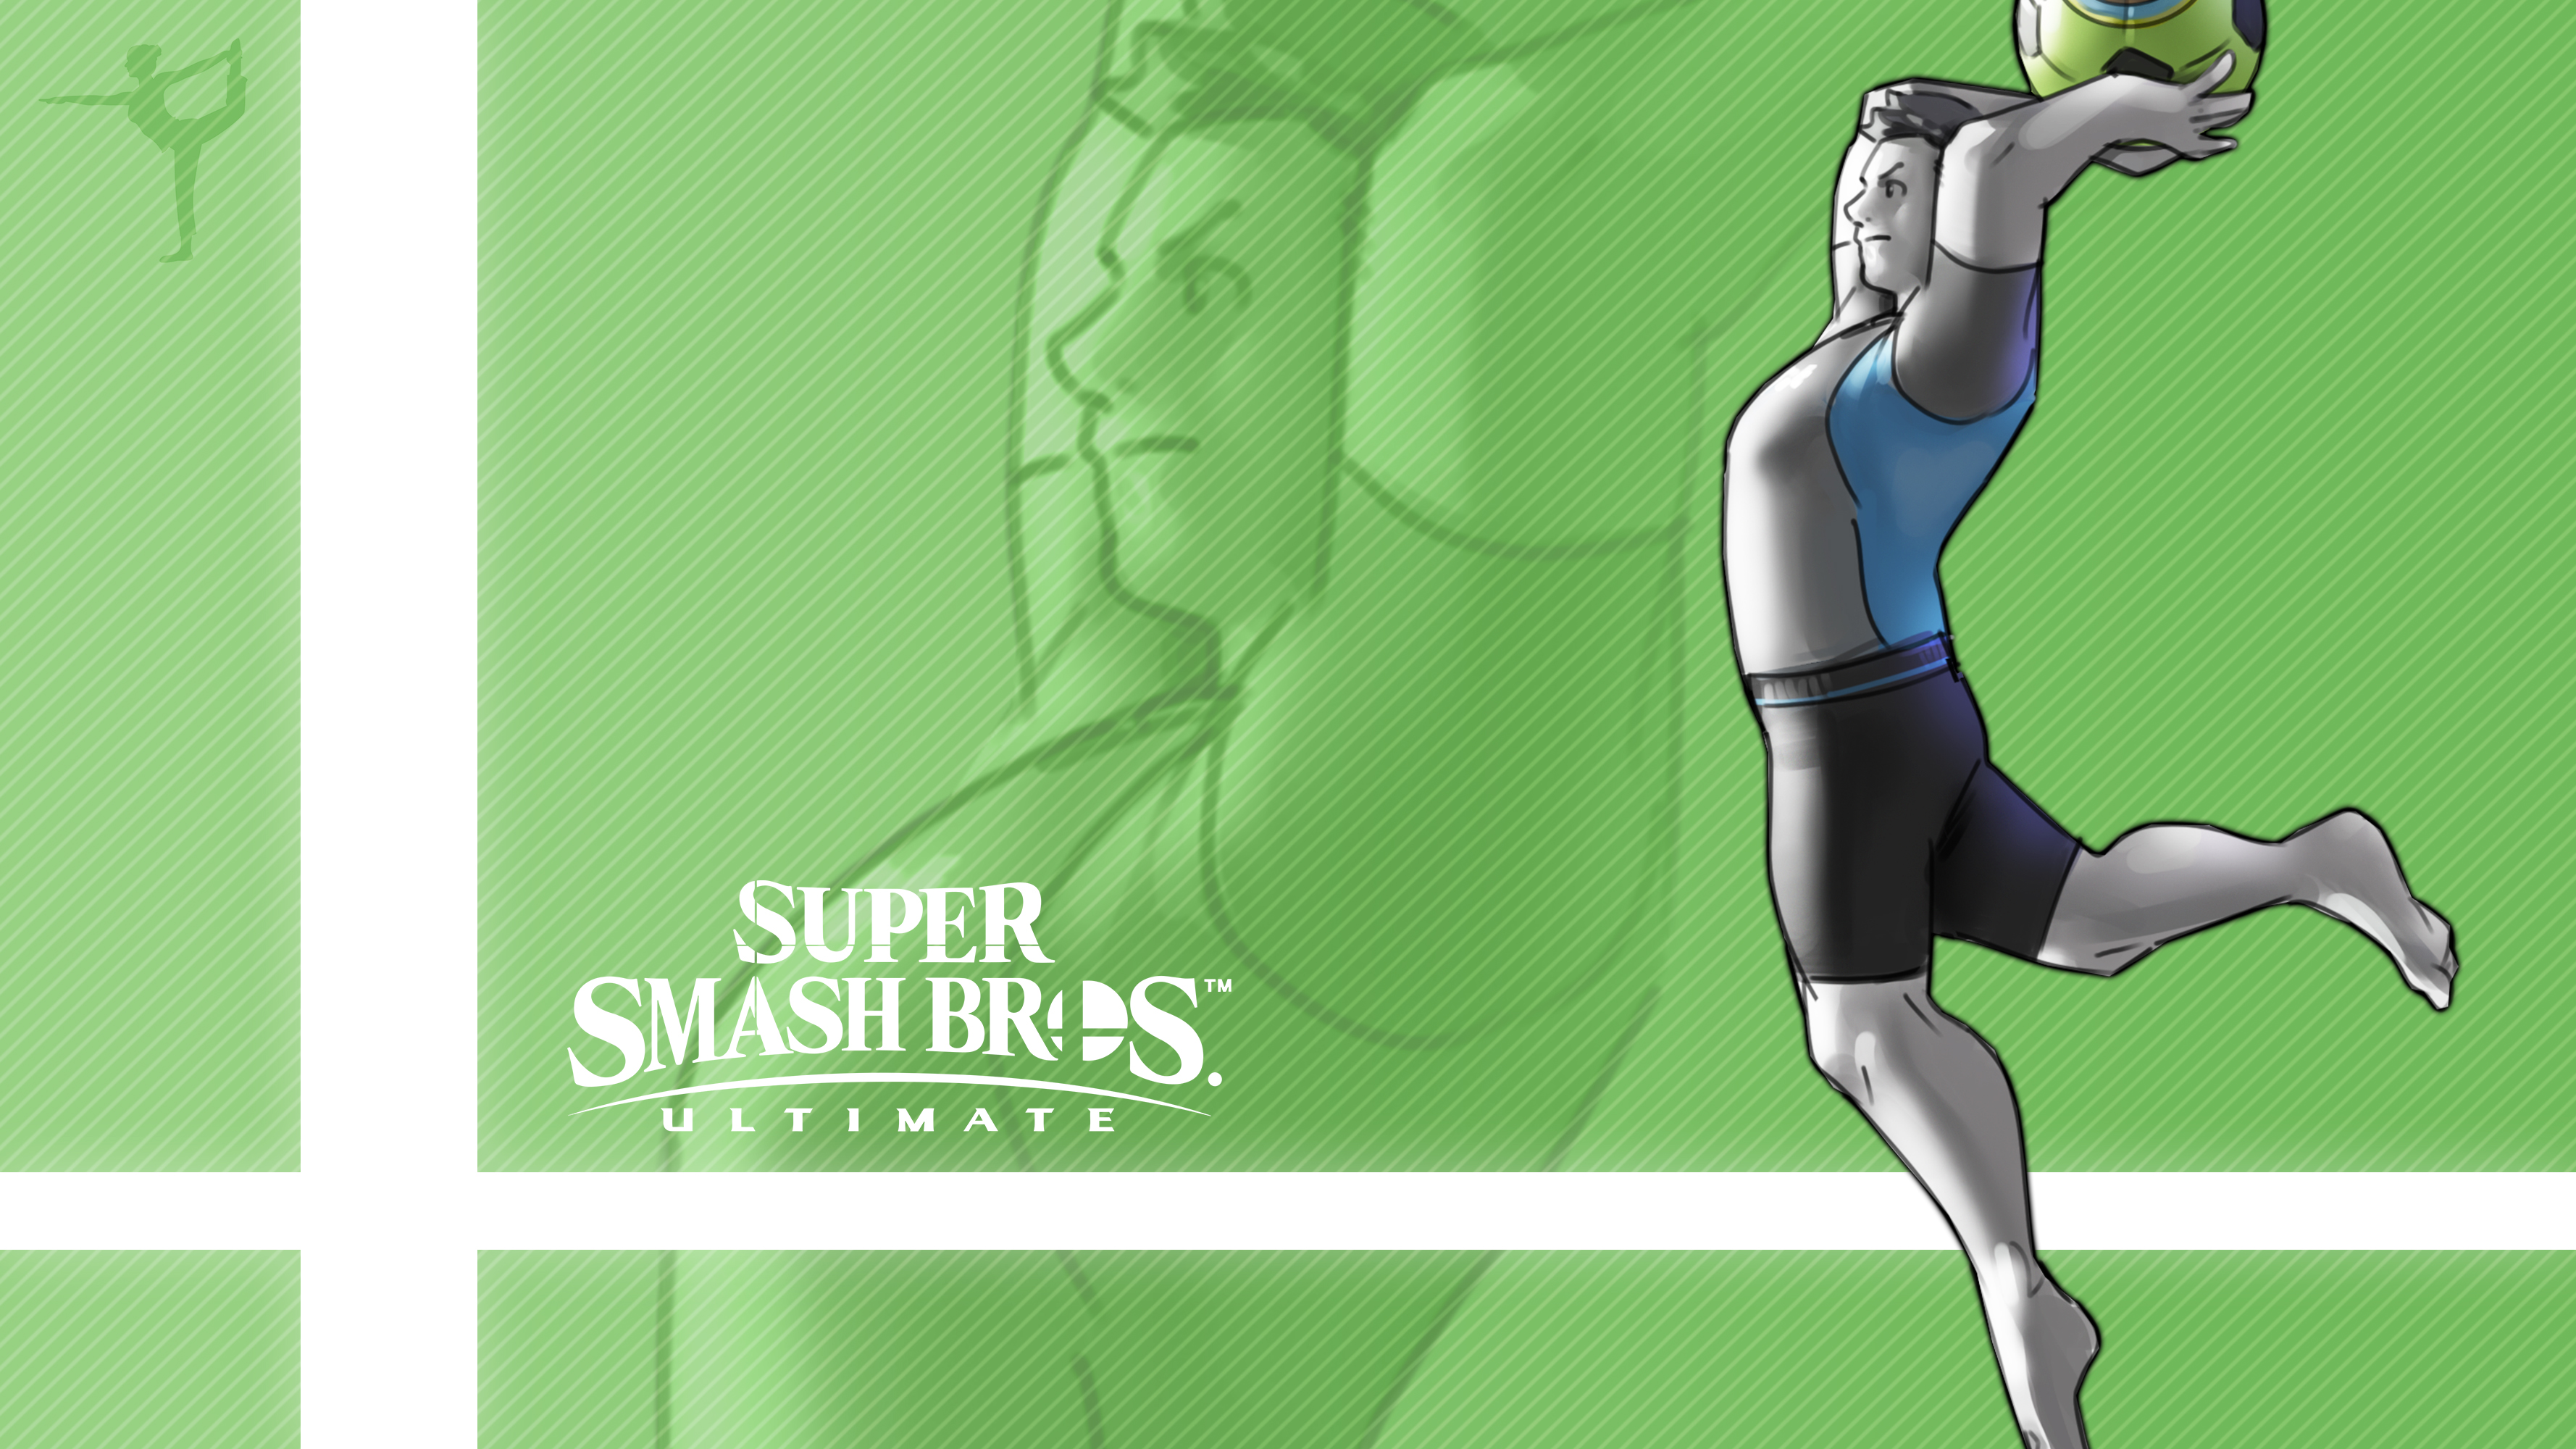 Male Wii Fit Trainer In Super Smash Bros. Ultimate by Callum Nakajima